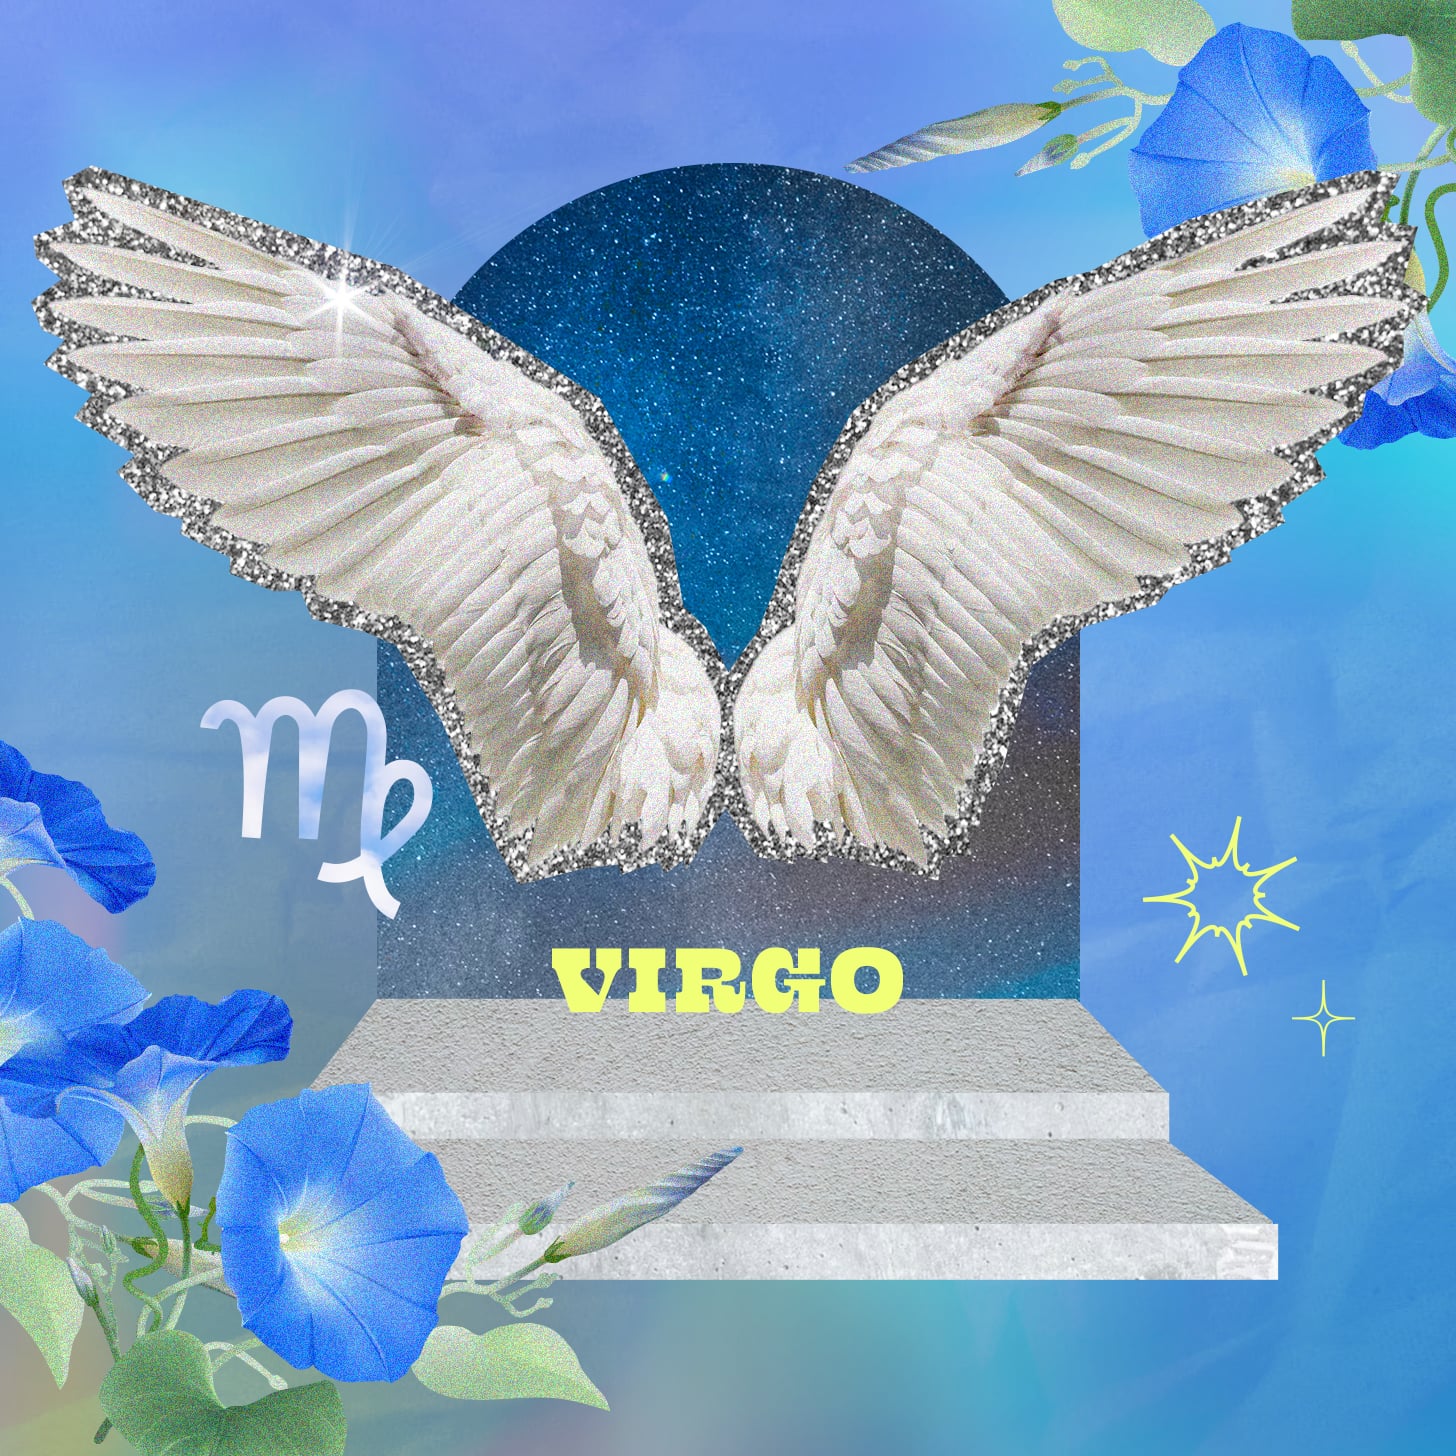 Virgo weekly horoscope for Dec. 25, 2022